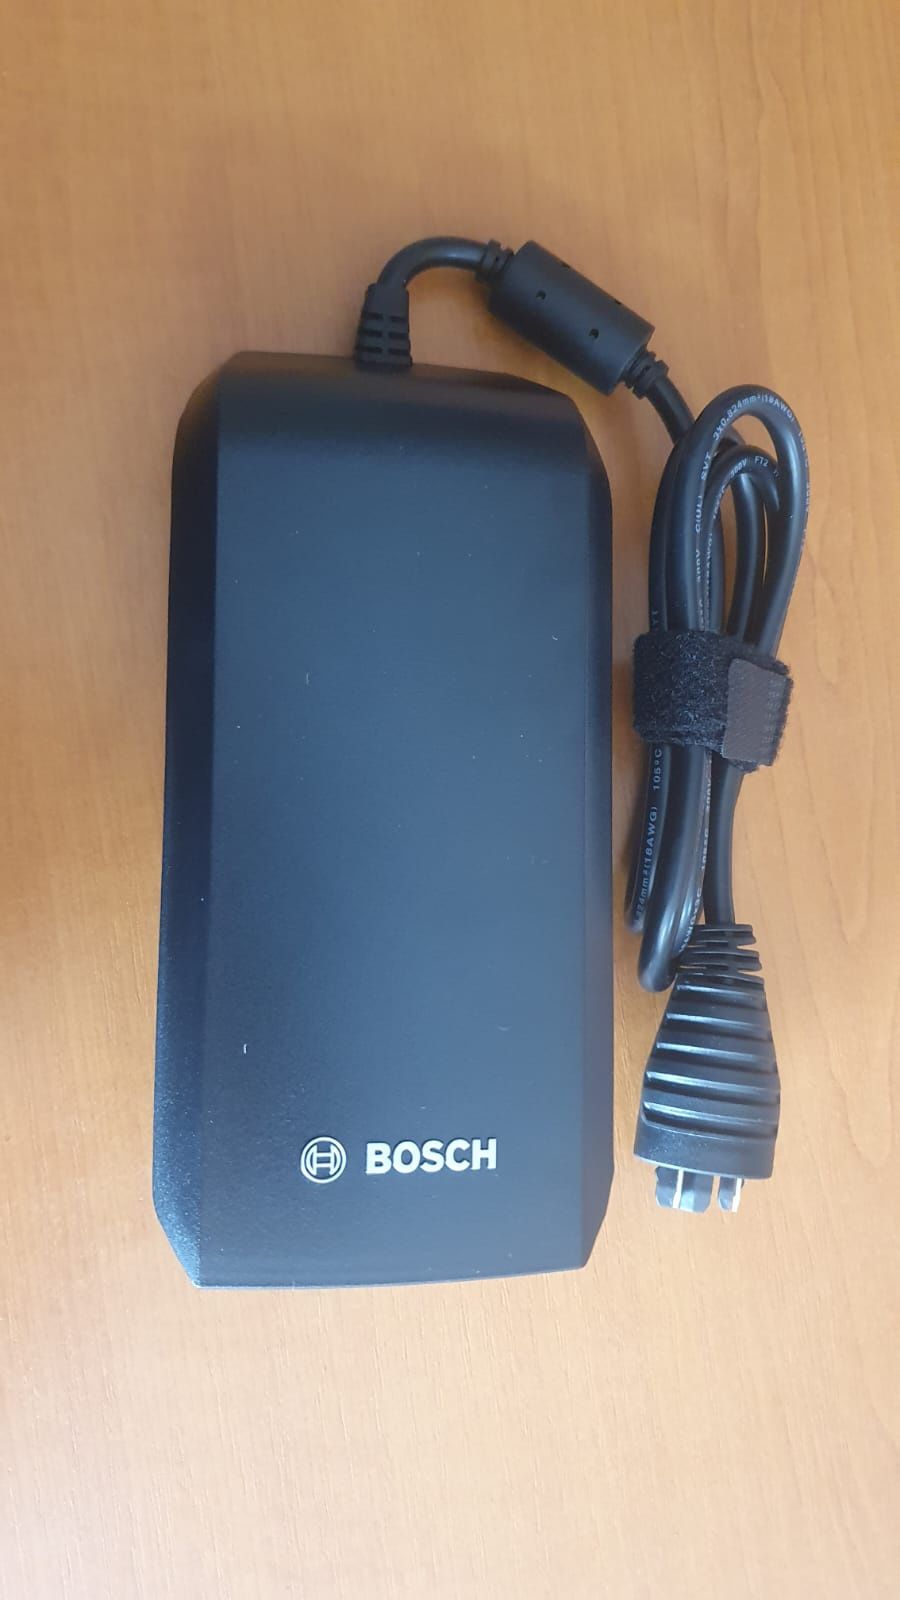 Incărcator original Bosch 4AH Normal si Smartsistem